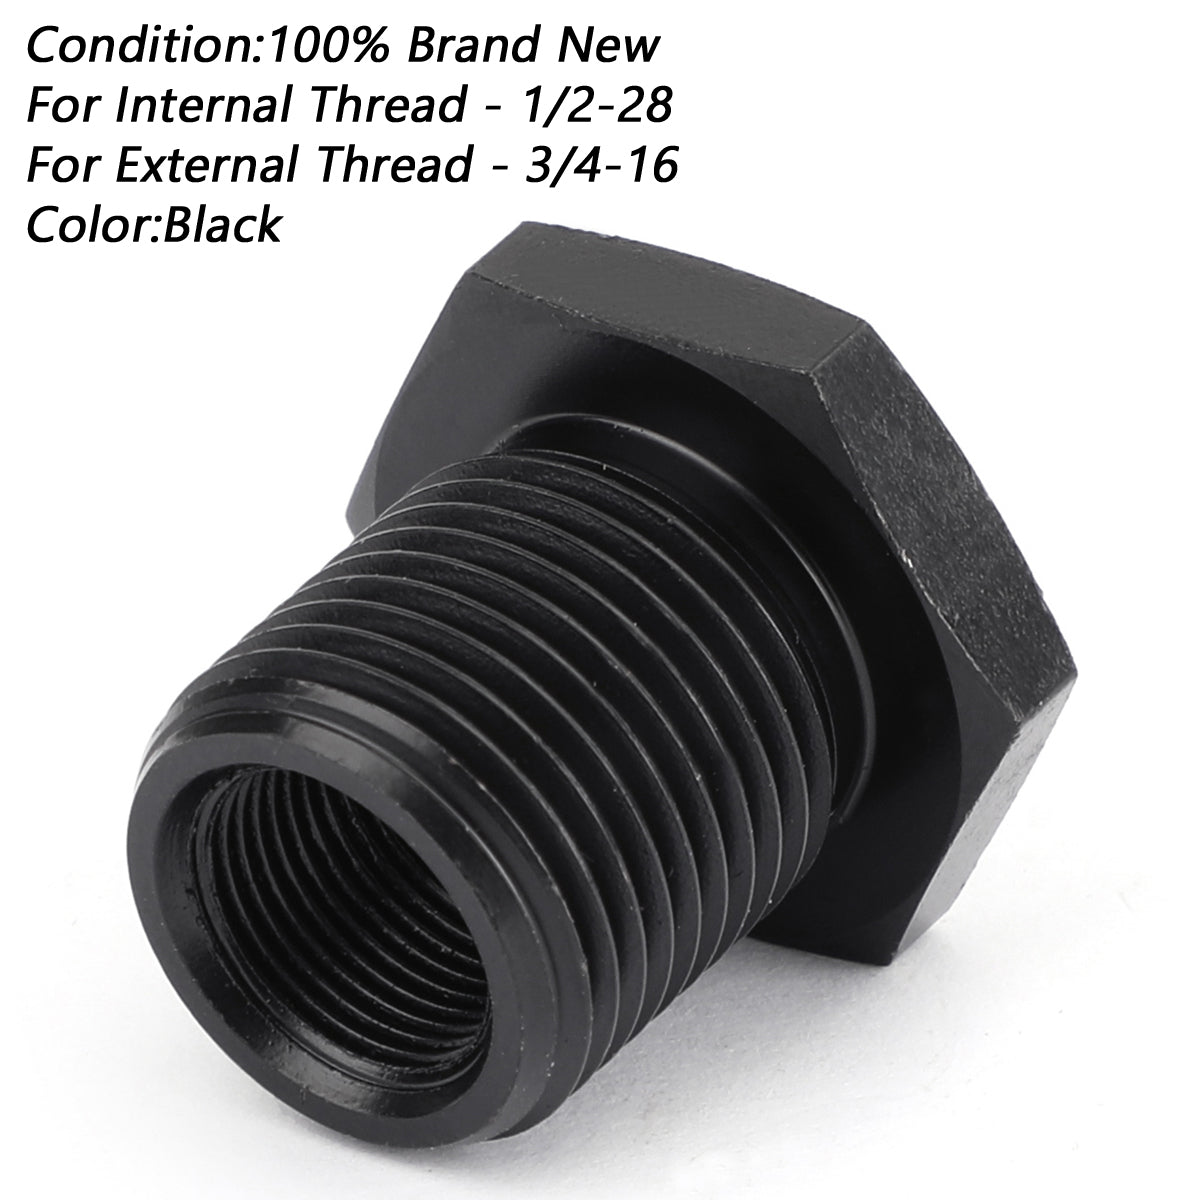 3PCS 1/2-28 to 3/4-16, 13/16-16, 3/4 NPT Thread Oil Filter Adapters Black New